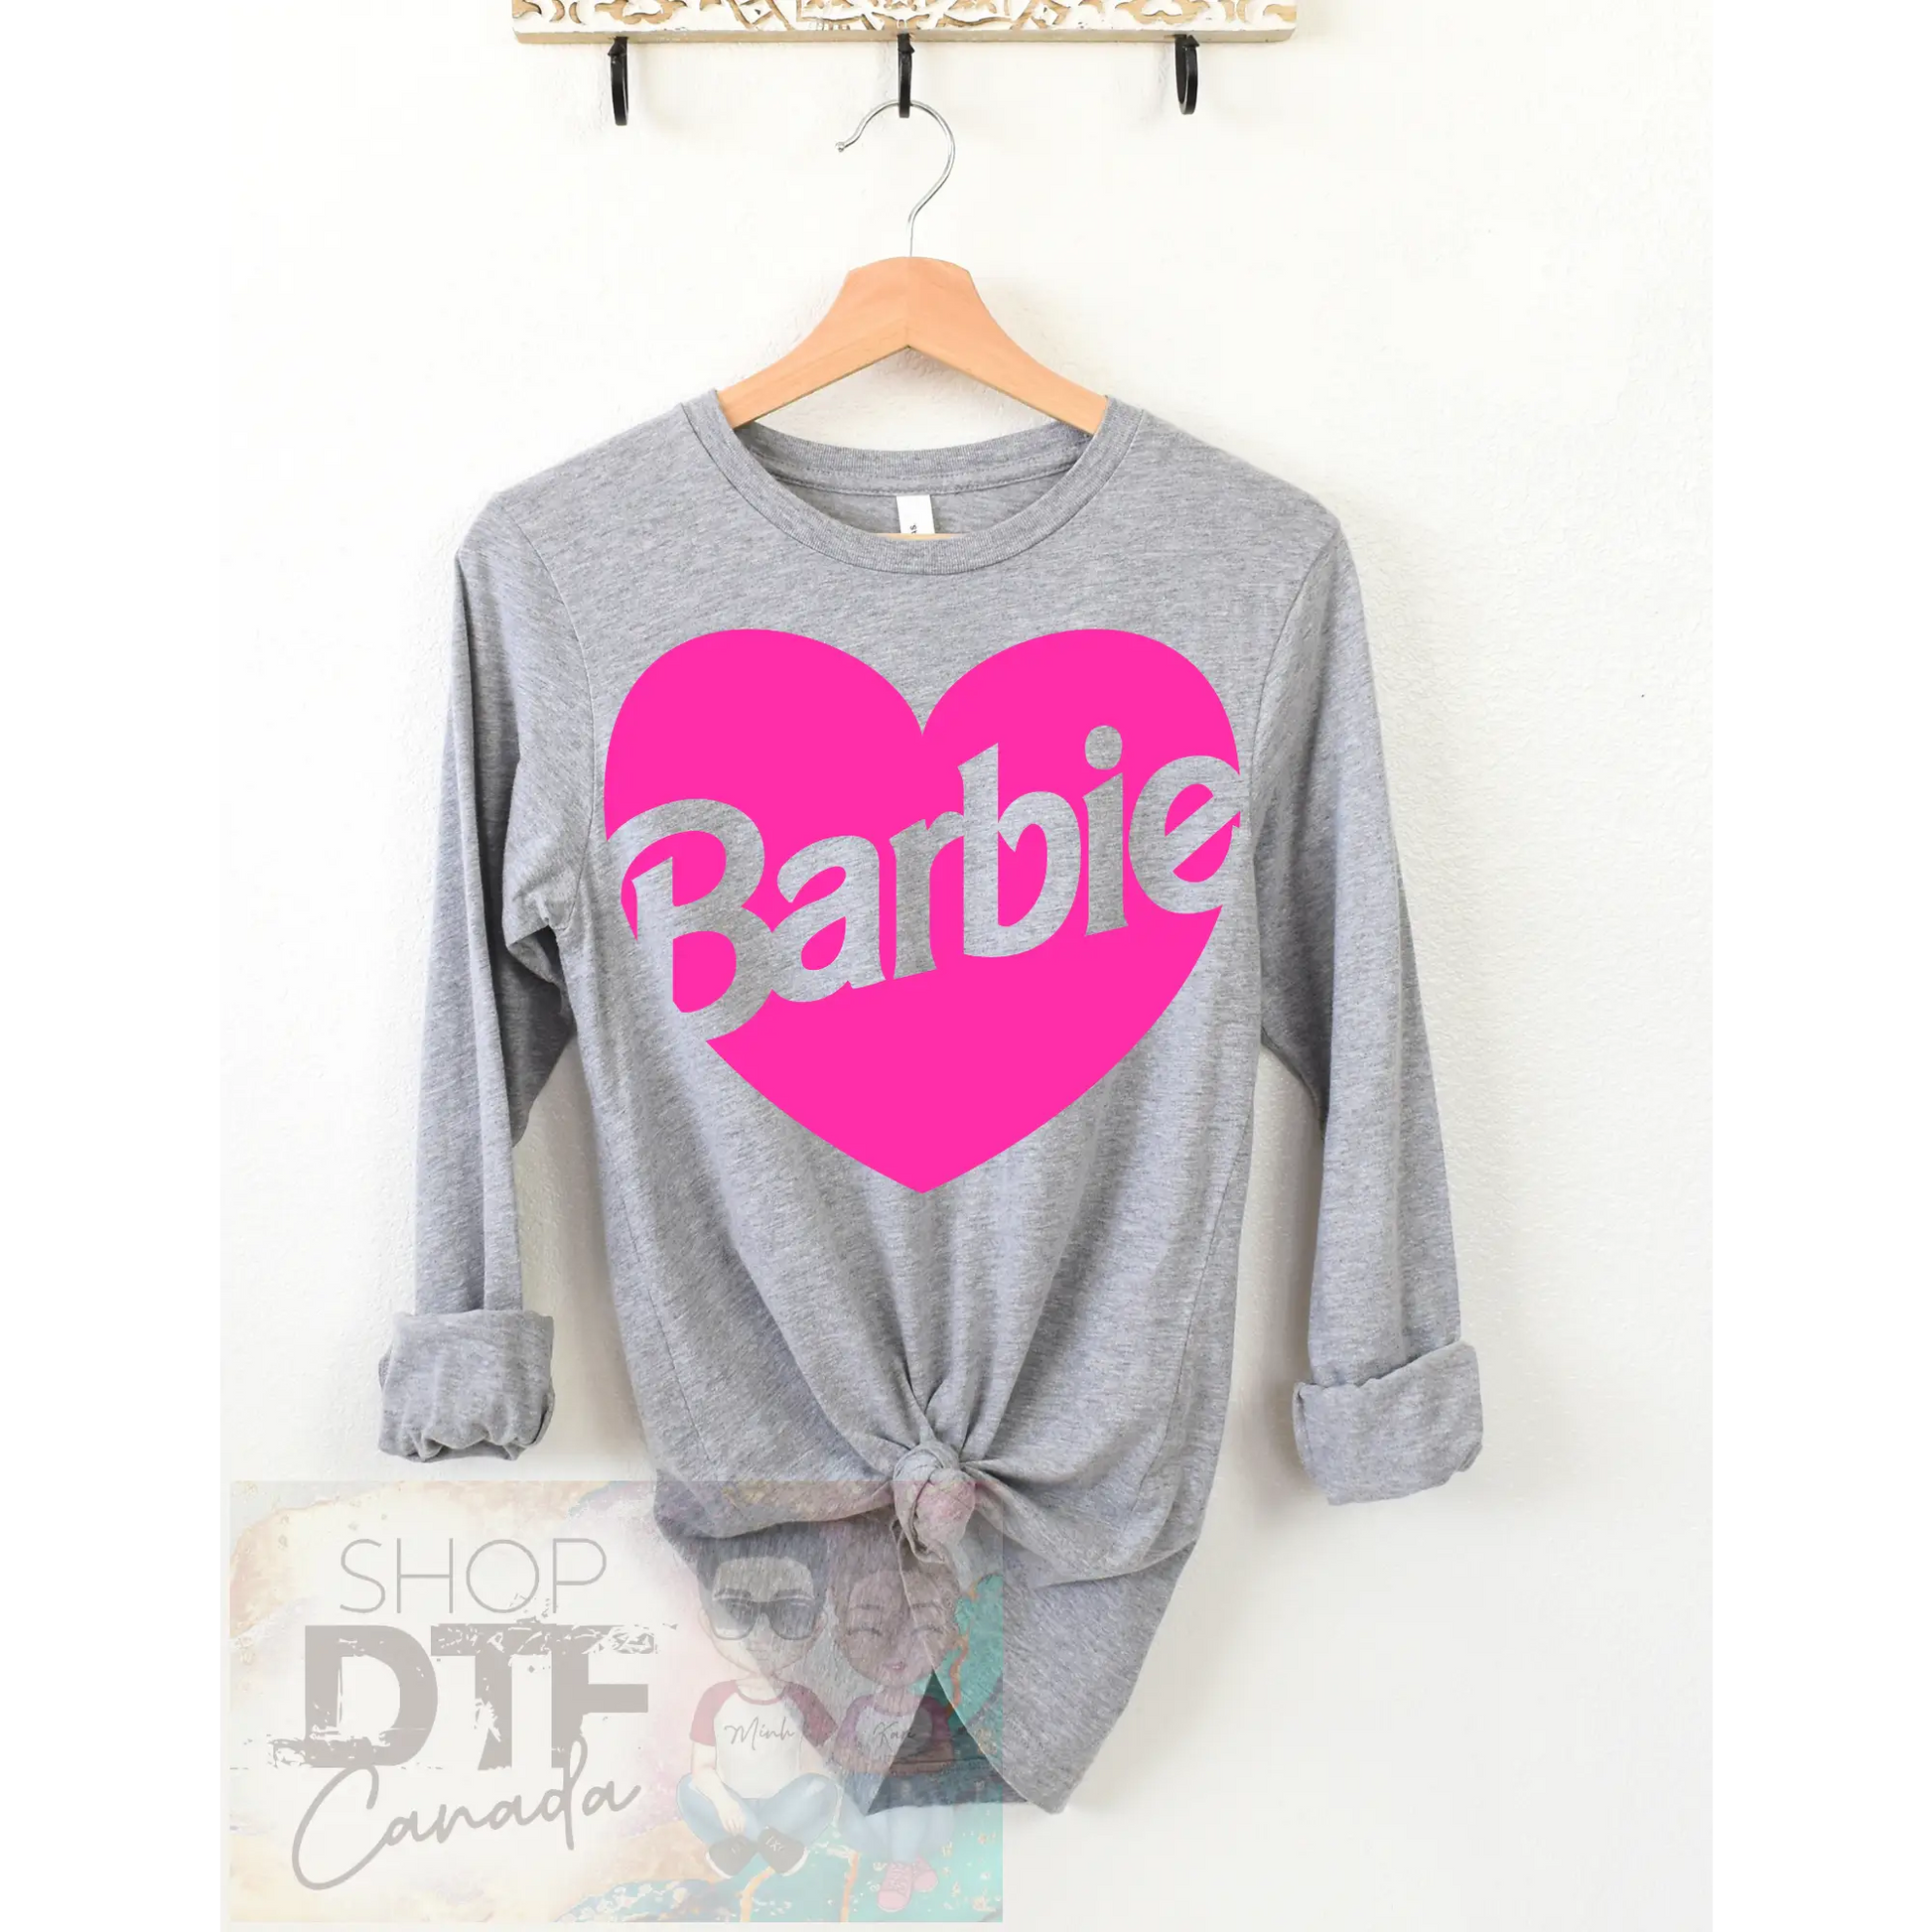 Barbie - Heart - Shirts & Tops